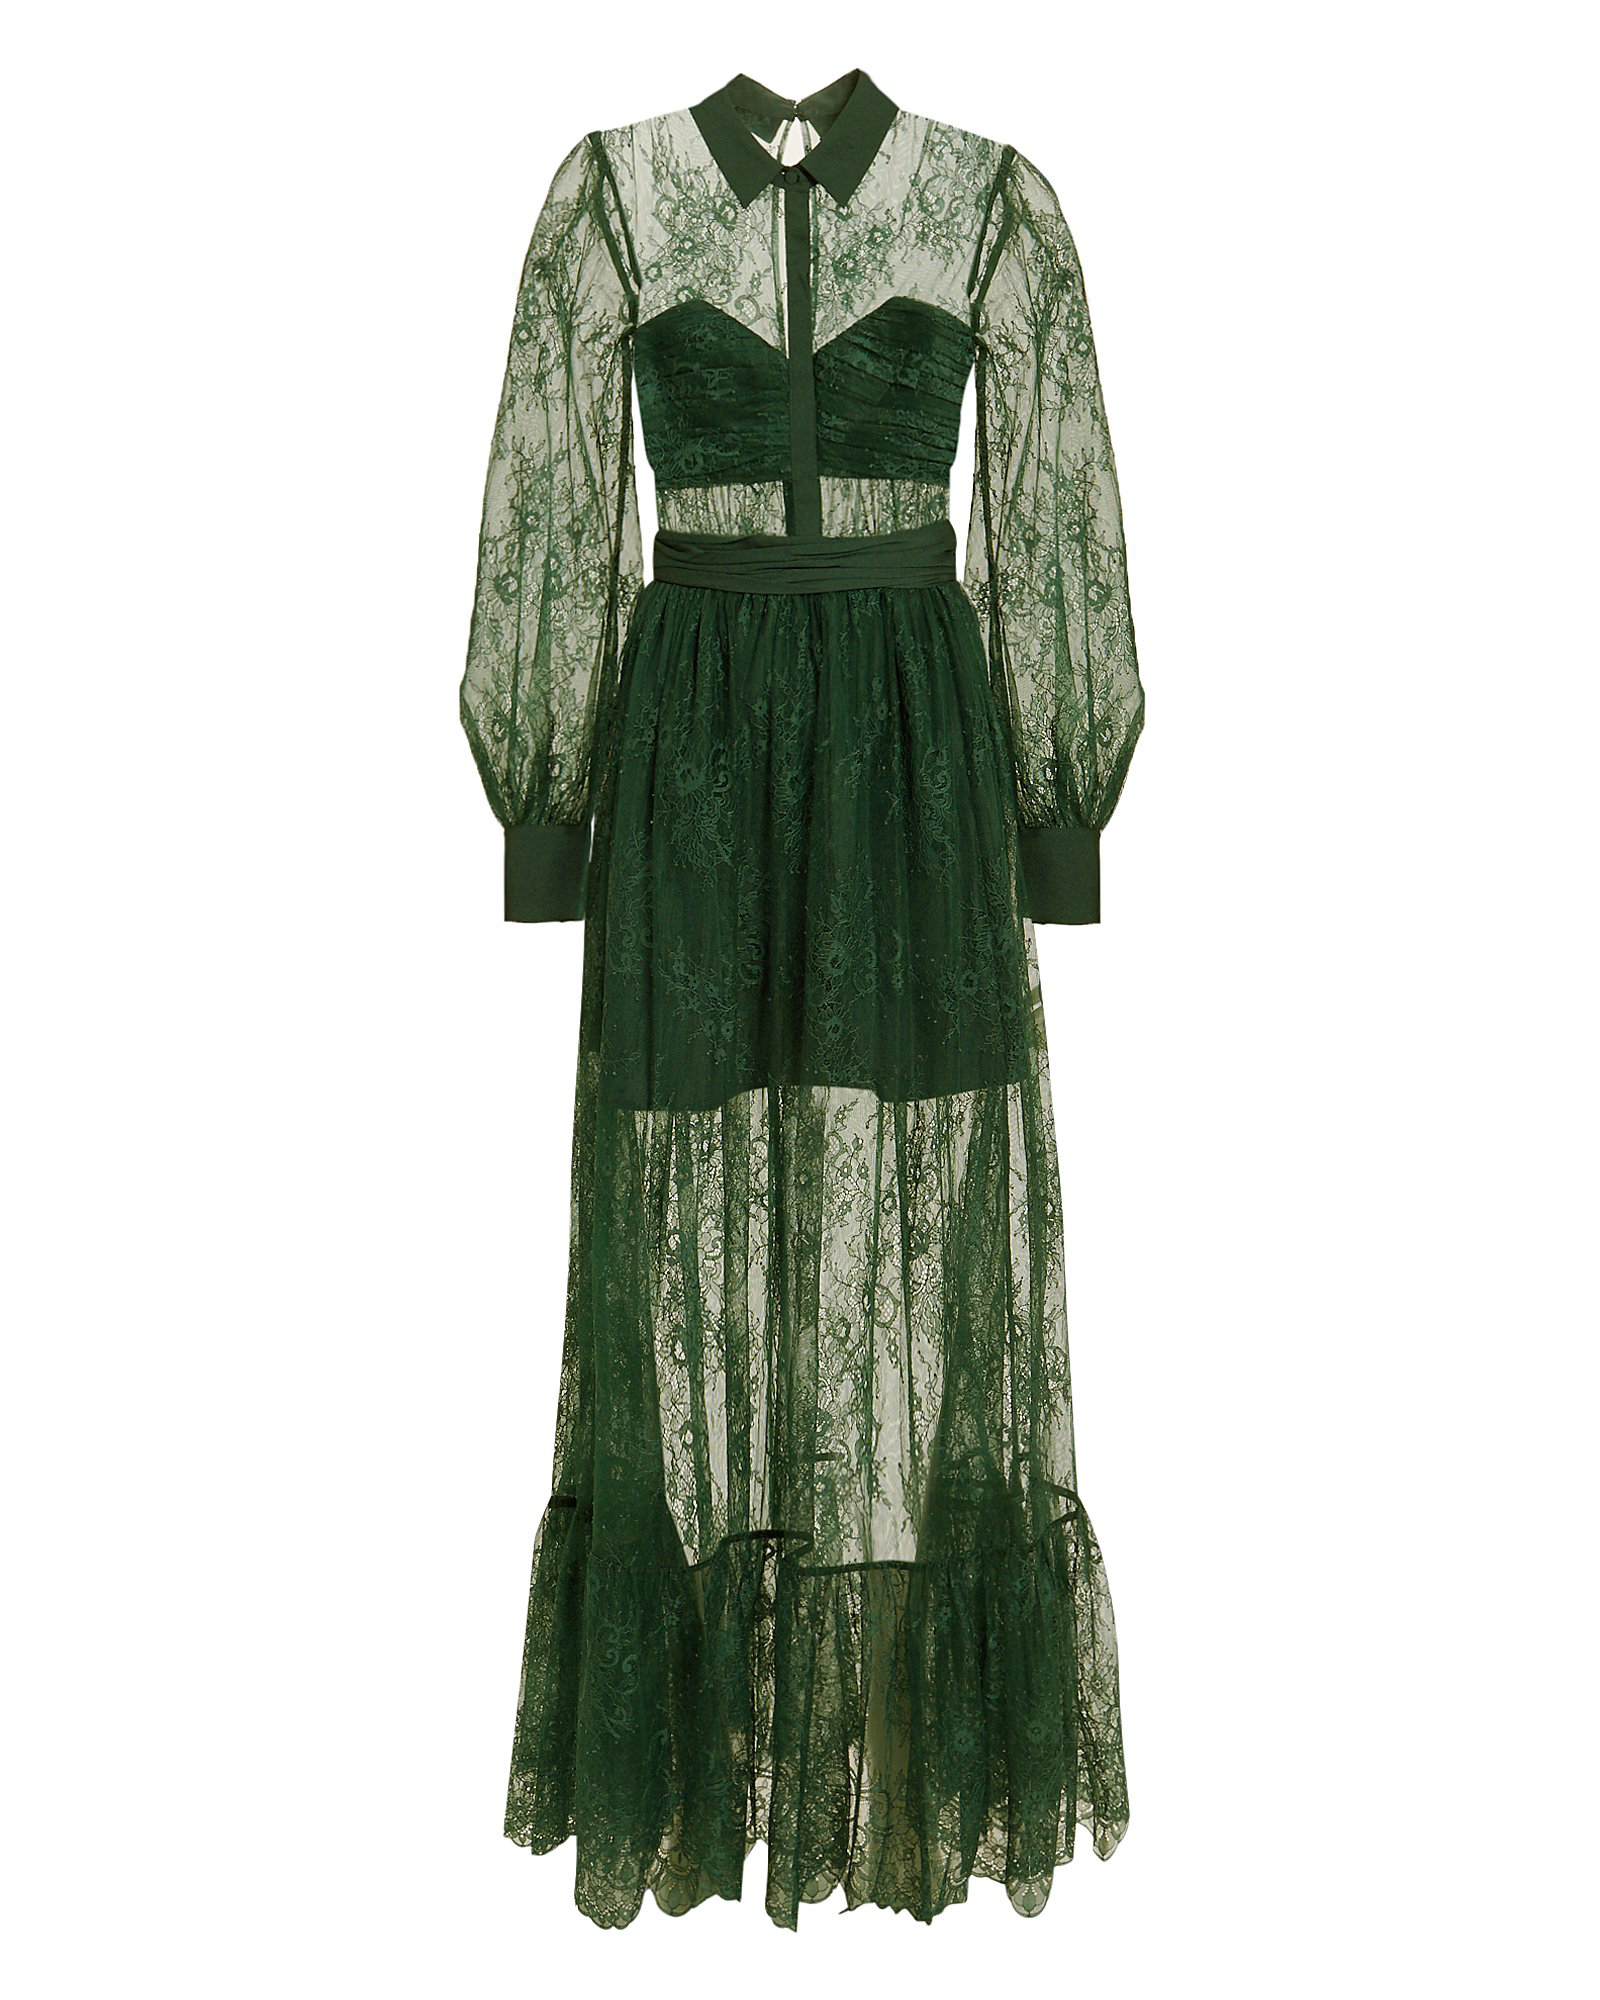 lace green maxi dress